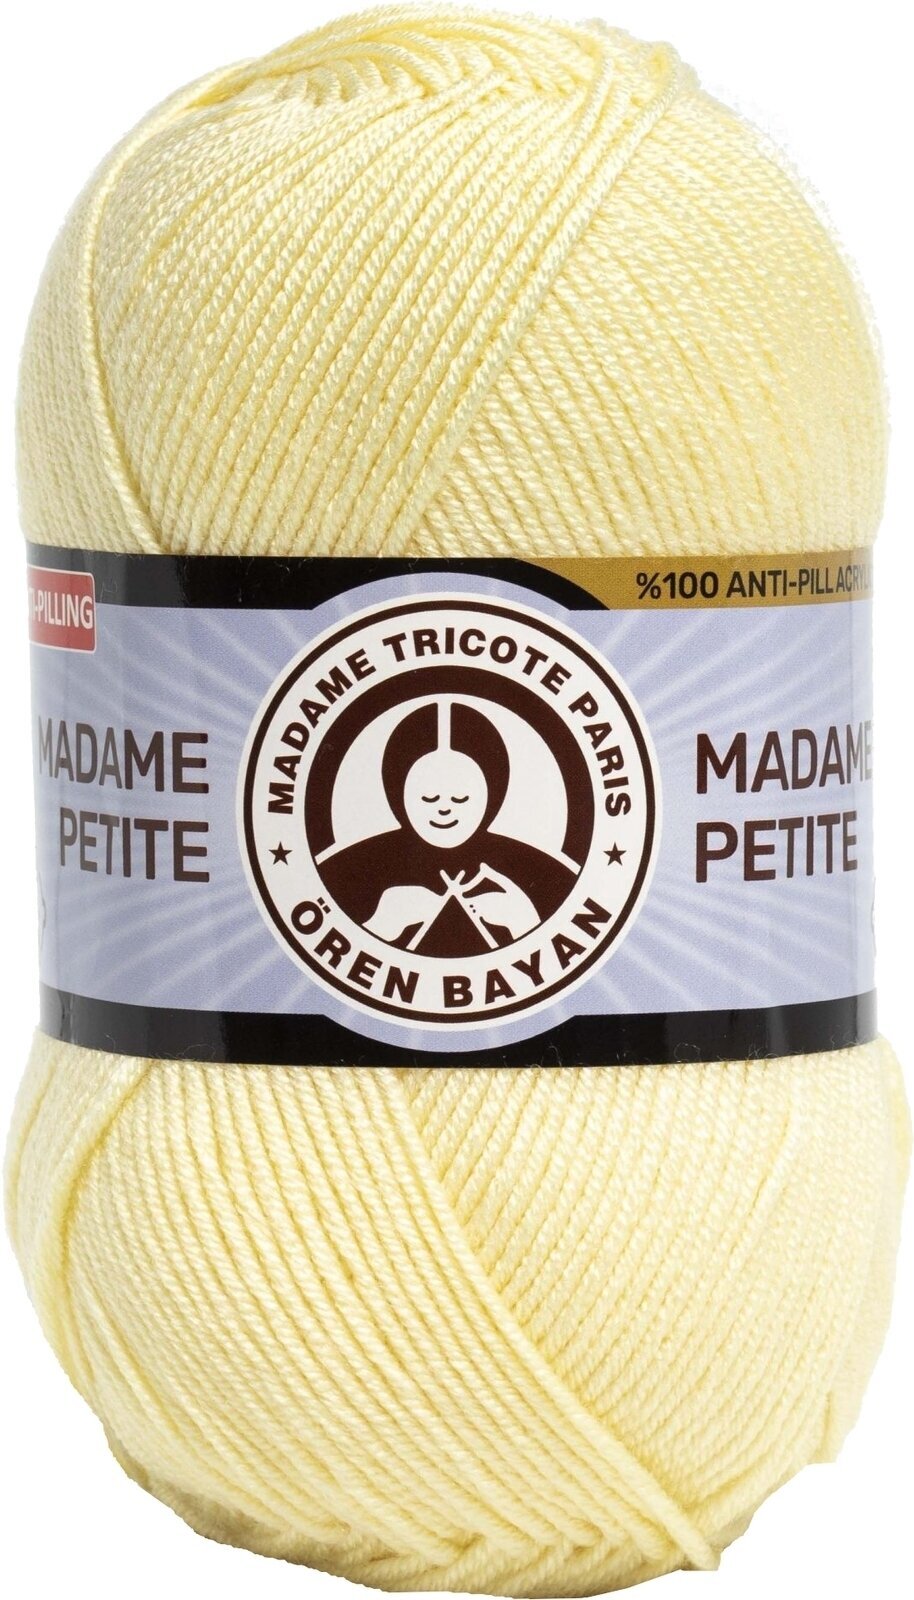 Knitting Yarn Madame Tricote Paris Madame Petite 3848 98 Knitting Yarn